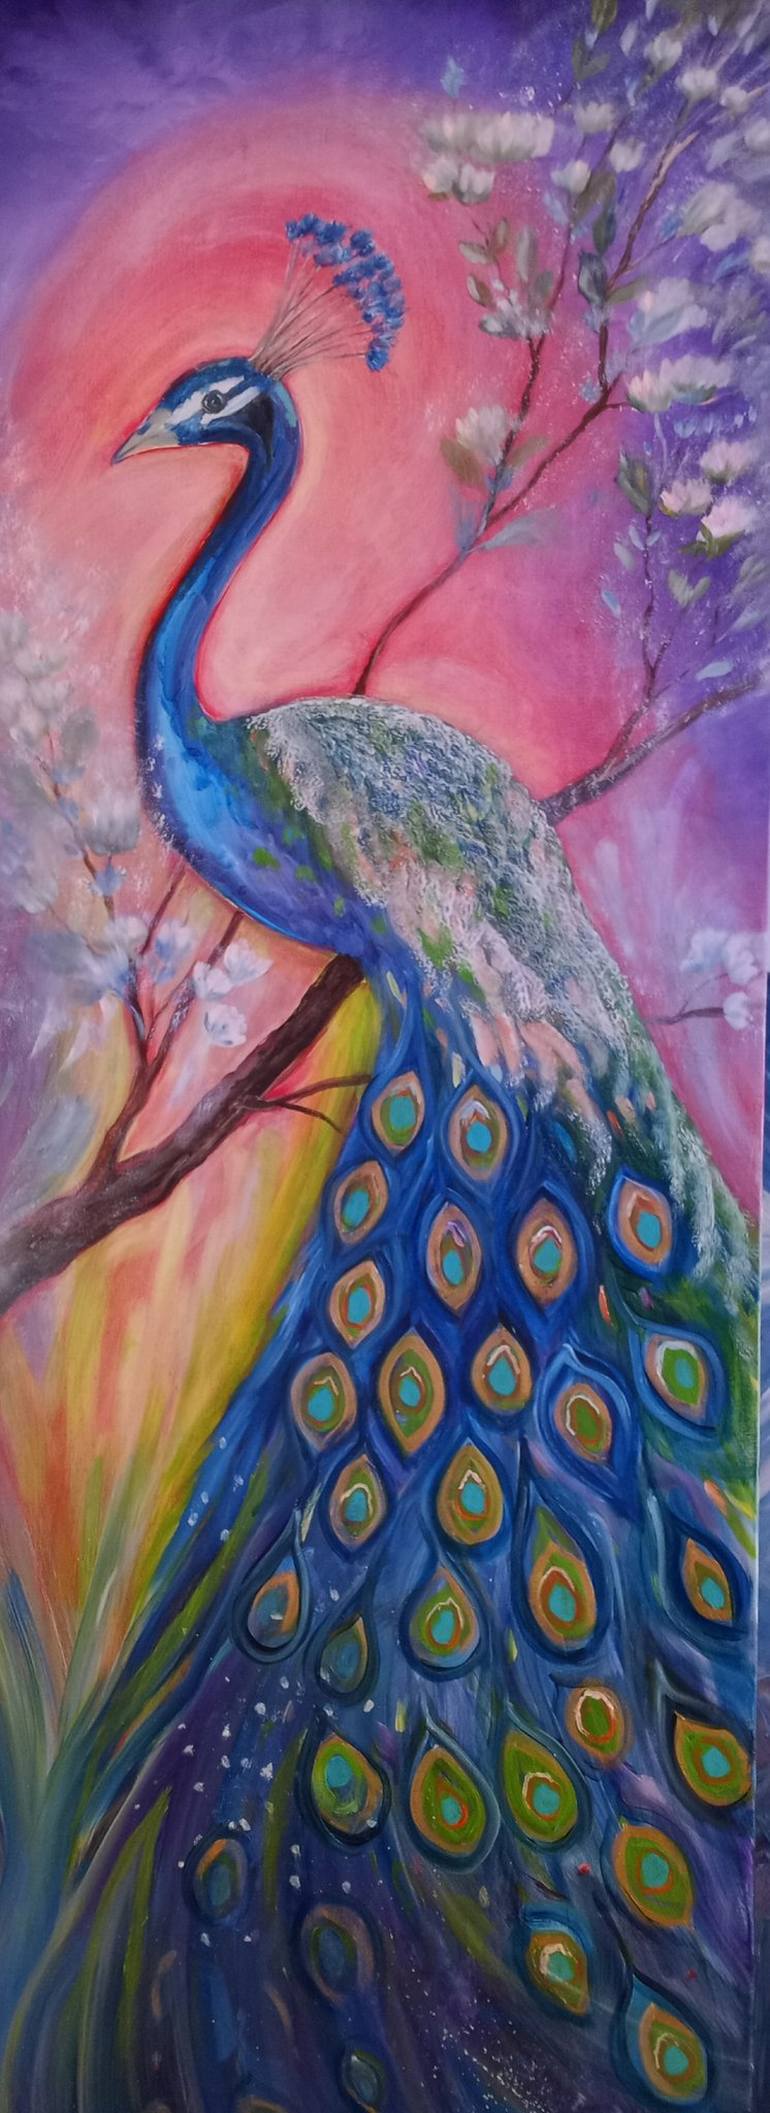 Sunrise Peacock Painting by Silvana de Boer | Saatchi Art